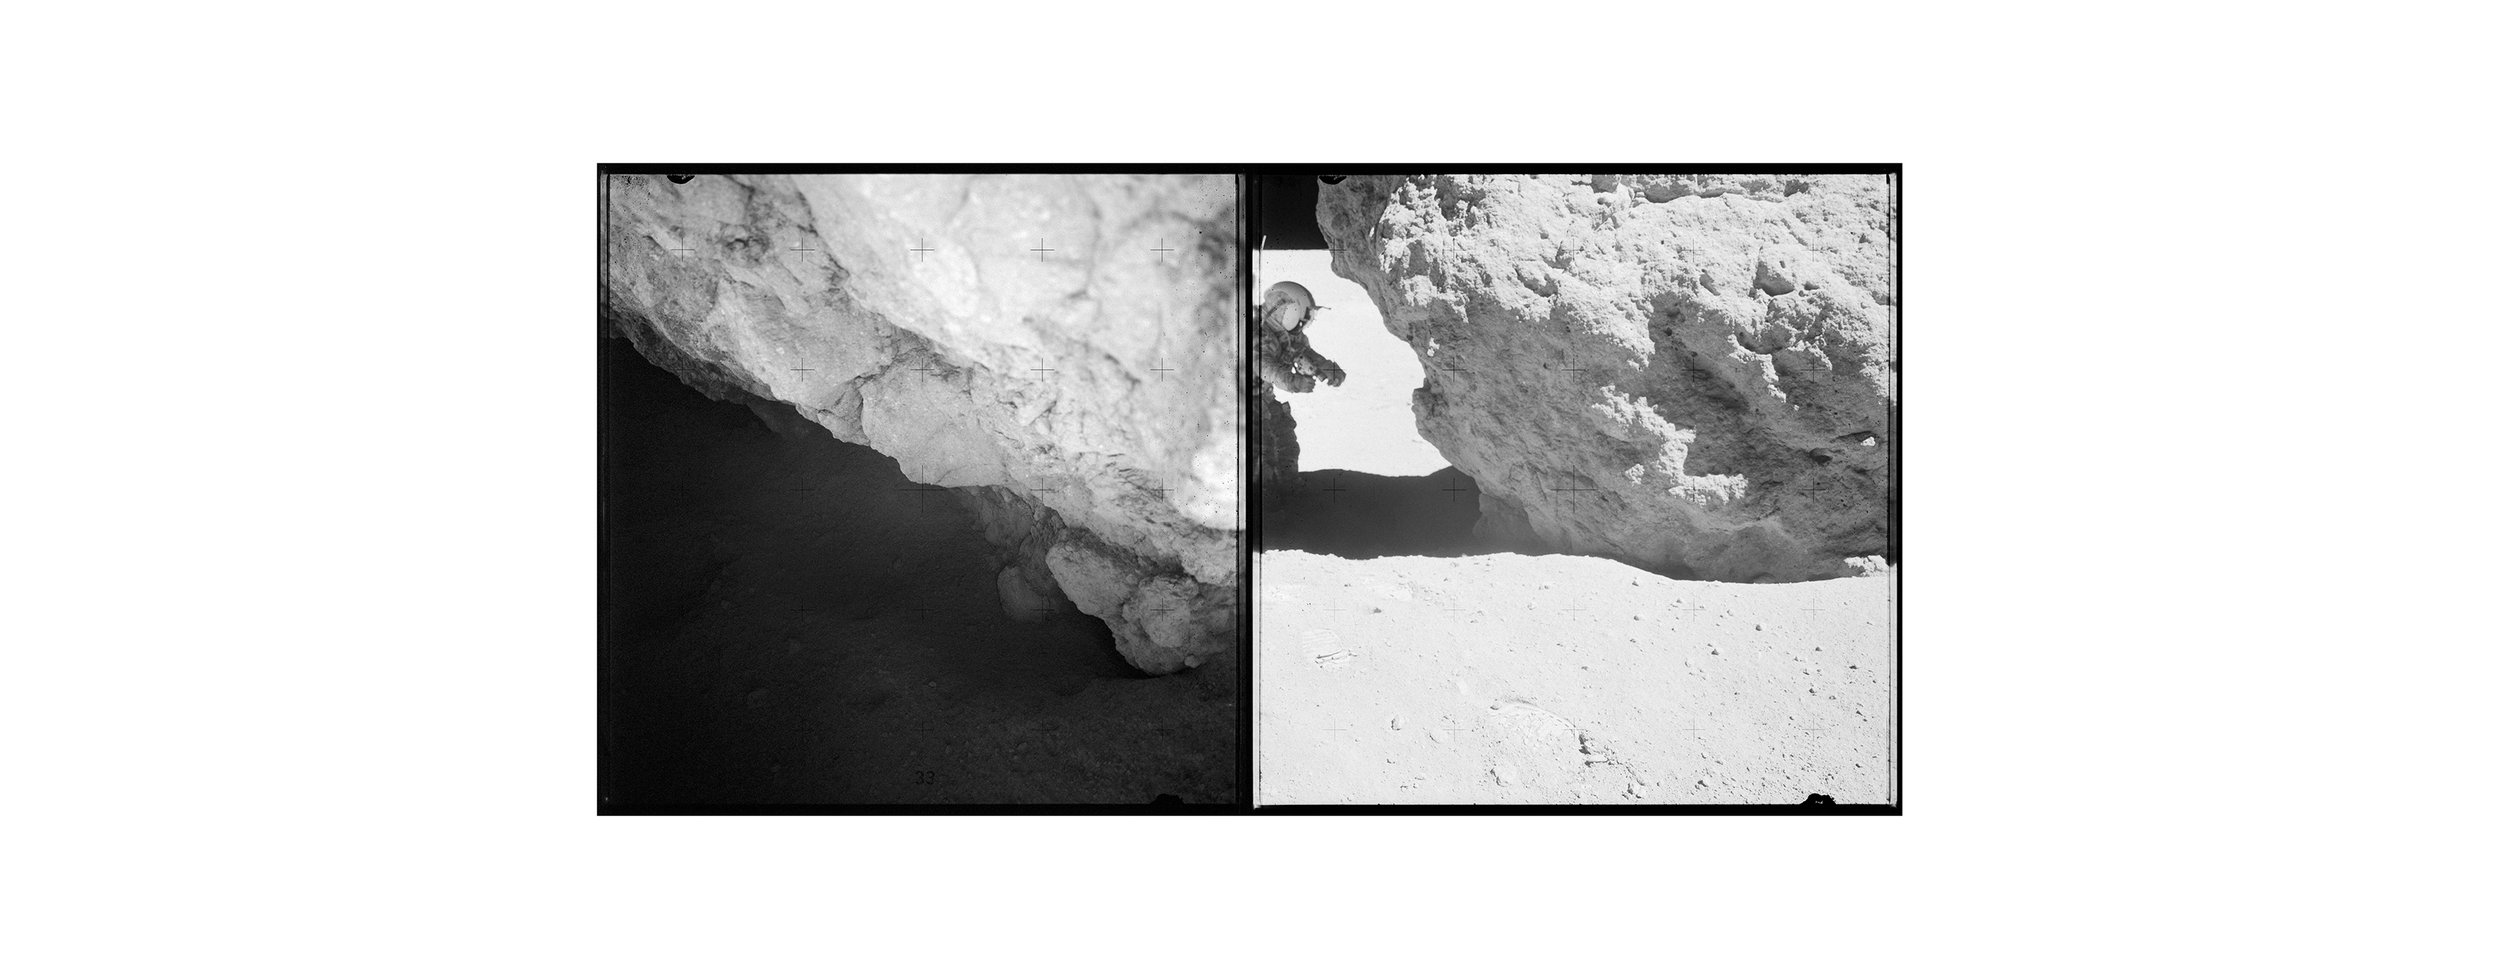  Descartes Mountains, taking soil samples protected from light (100x60)Apollo 16 Magazine 106/K - NASA photographs 1972 